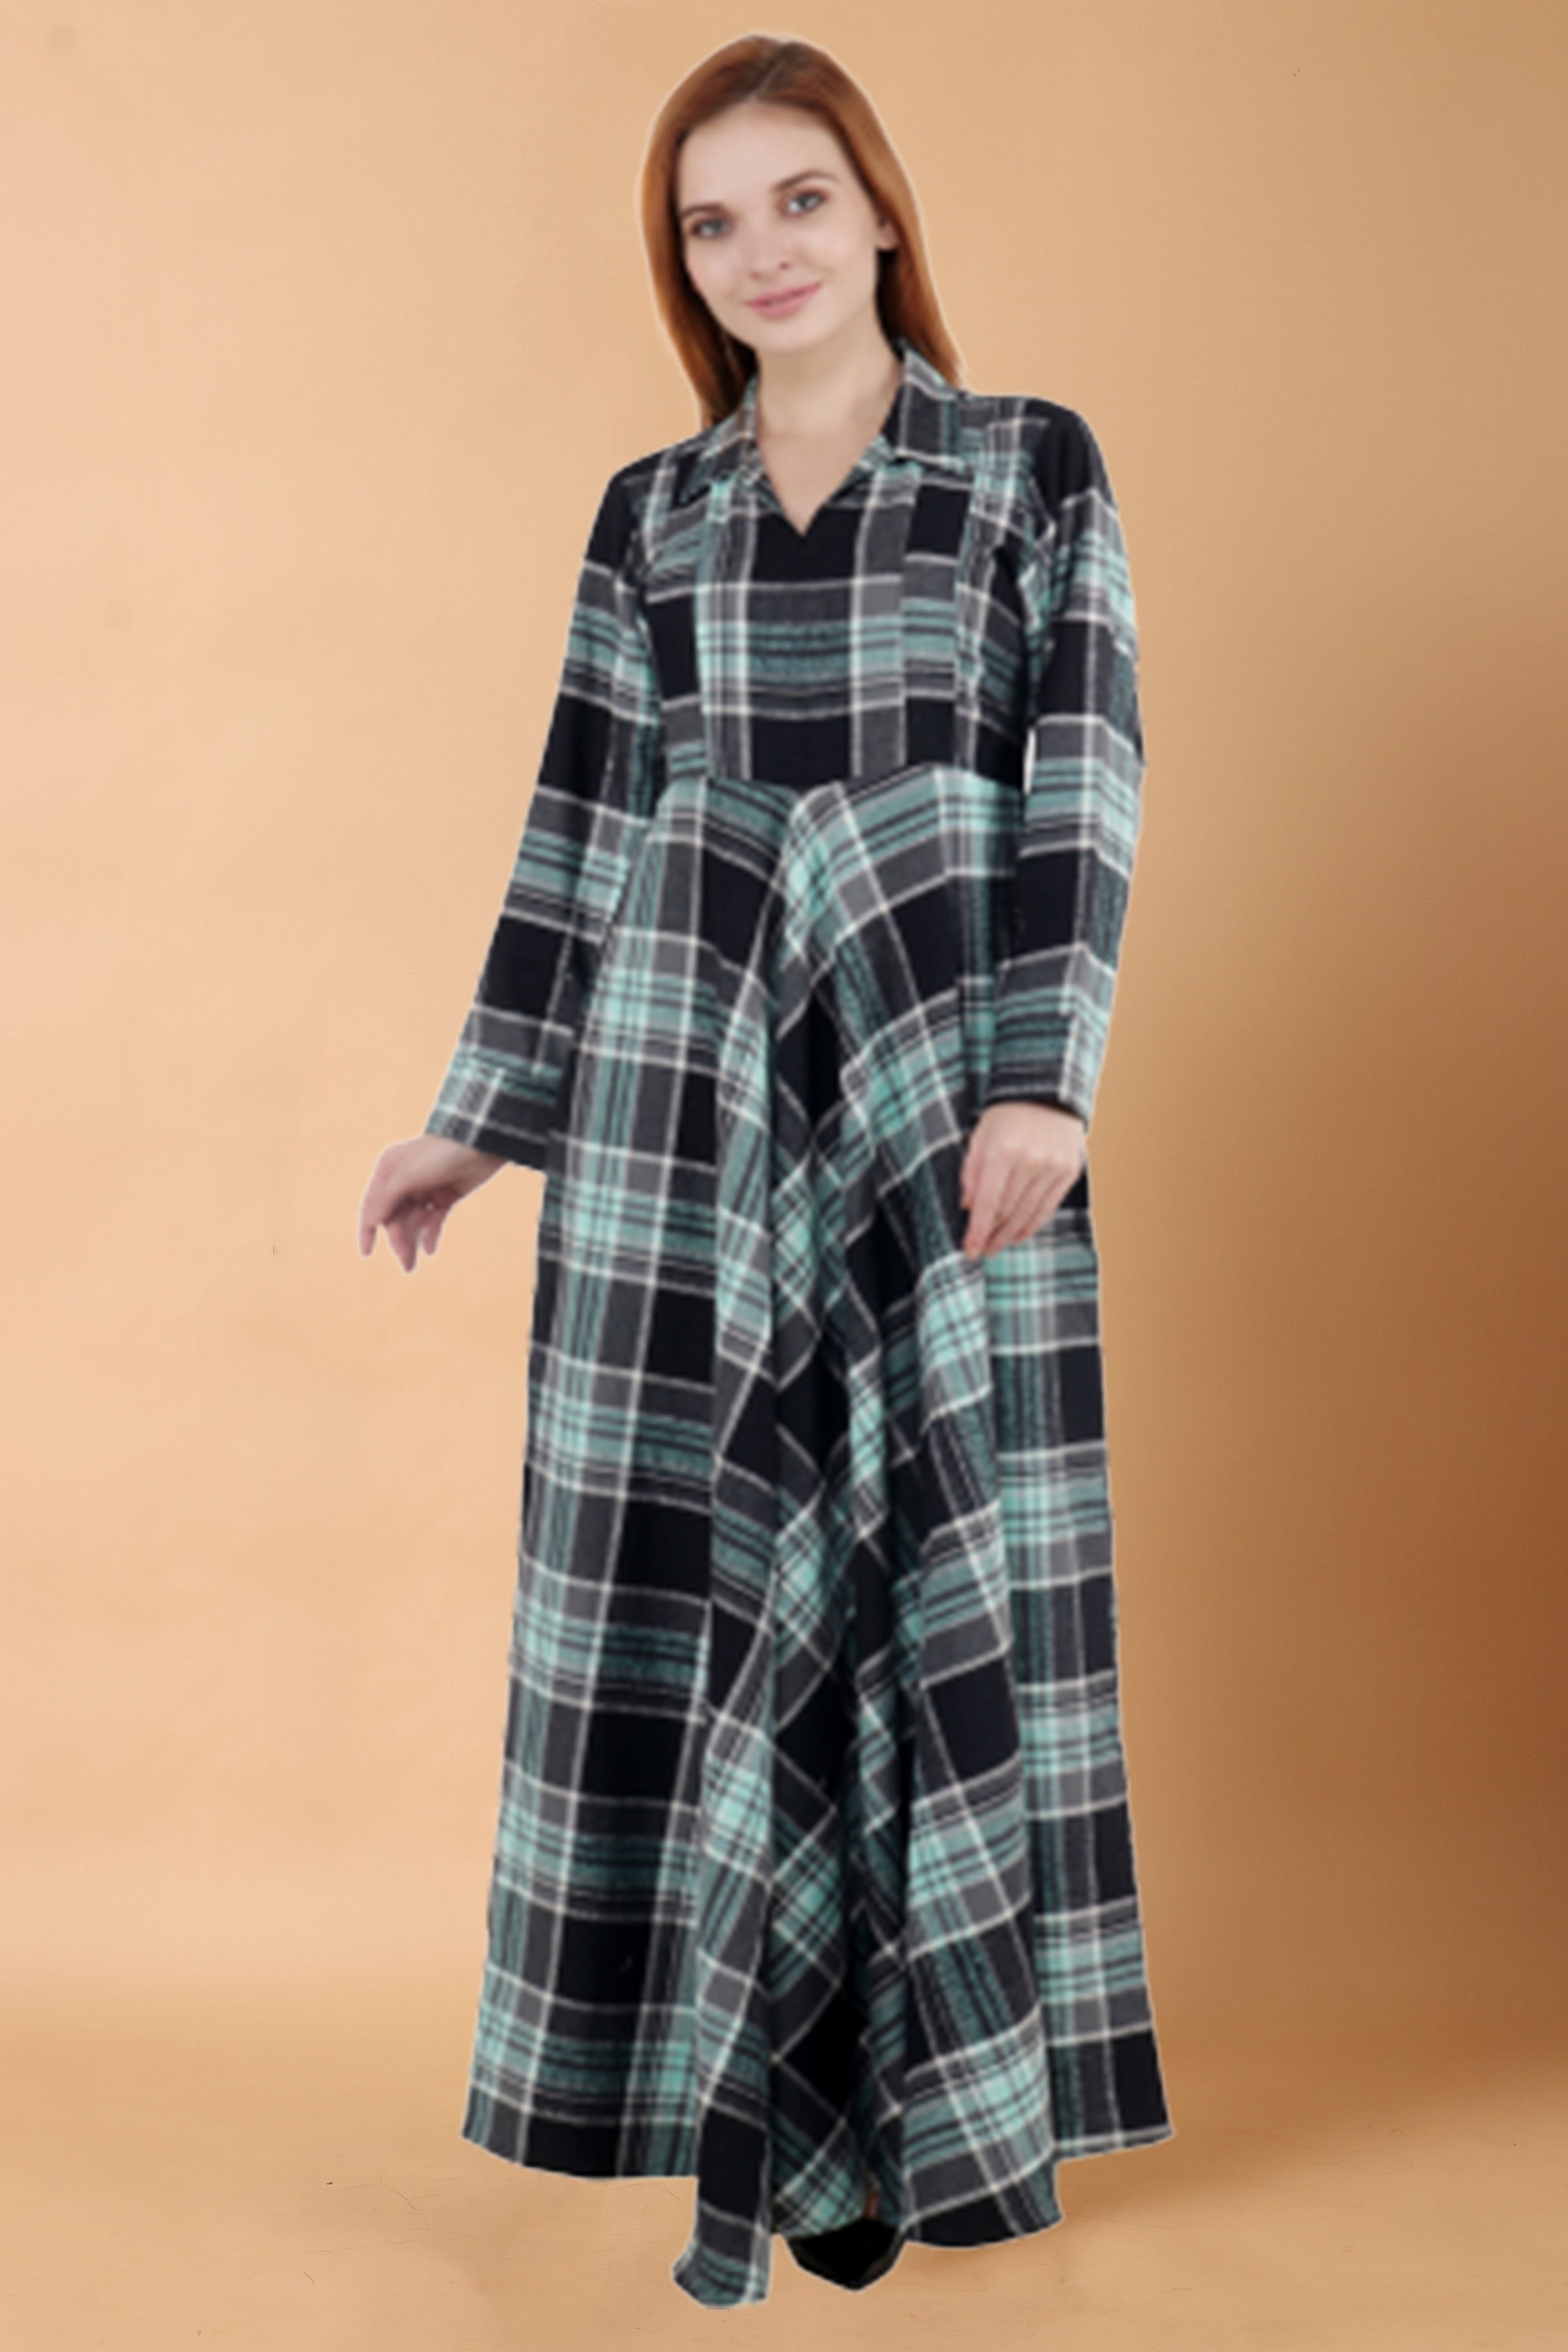 Ladies Designer One Piece Woolen Dress Manufacturer,Supplier,Exporter in  India